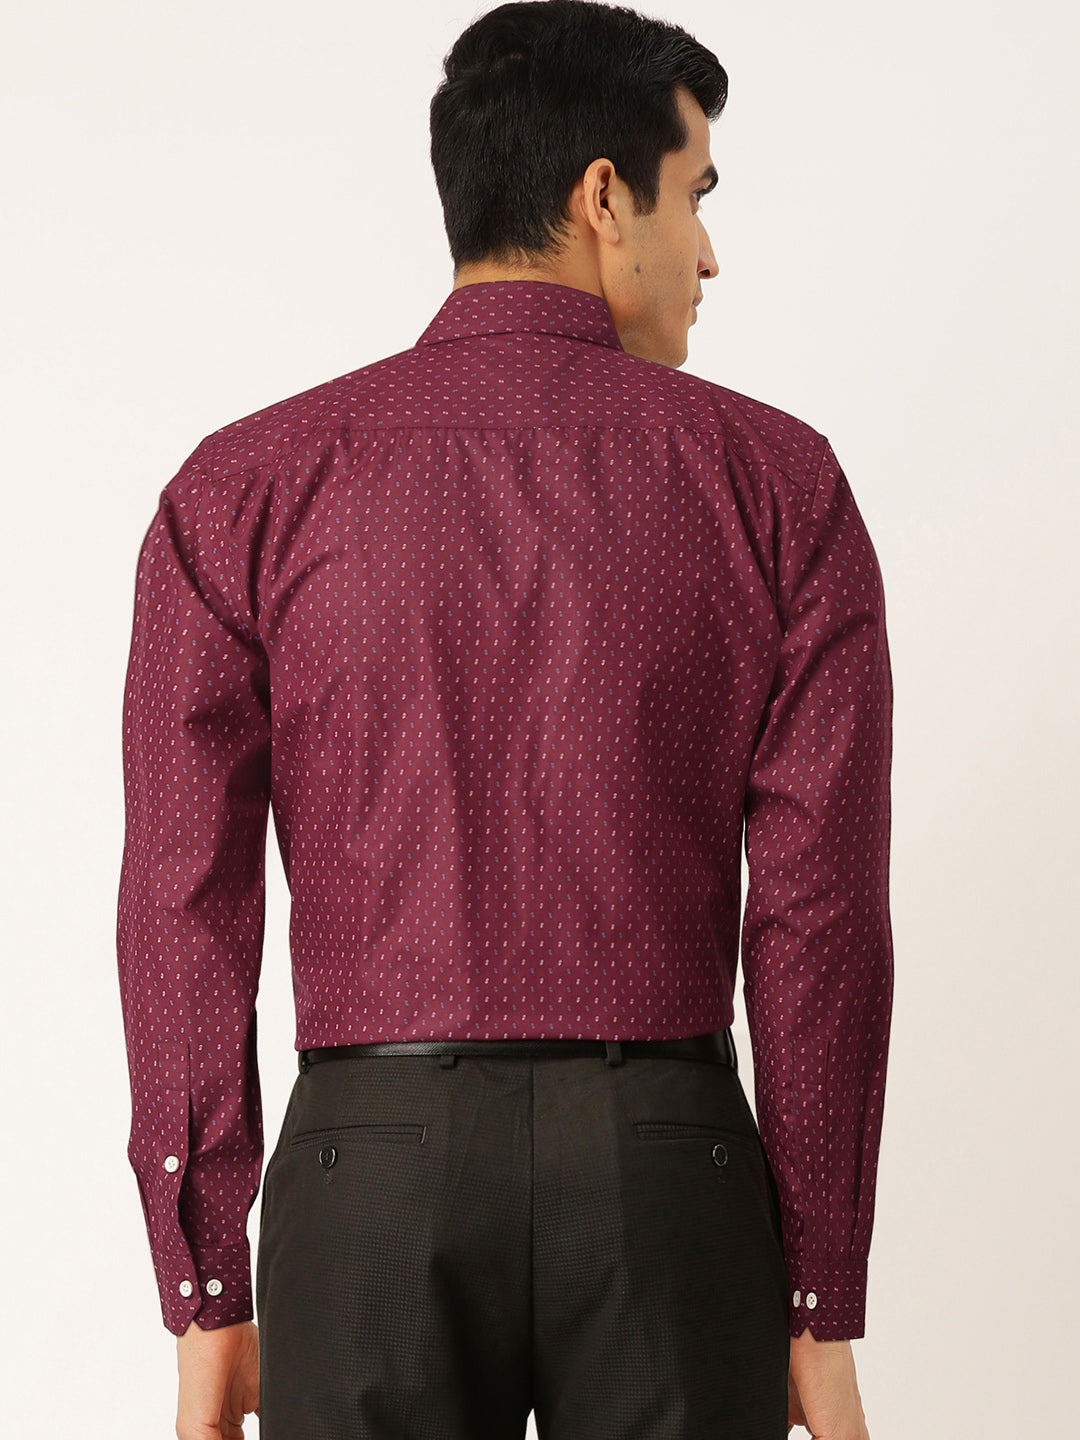 Men's Purple Cotton Printed Formal Shirts ( SF 716Wine ) - Jainish